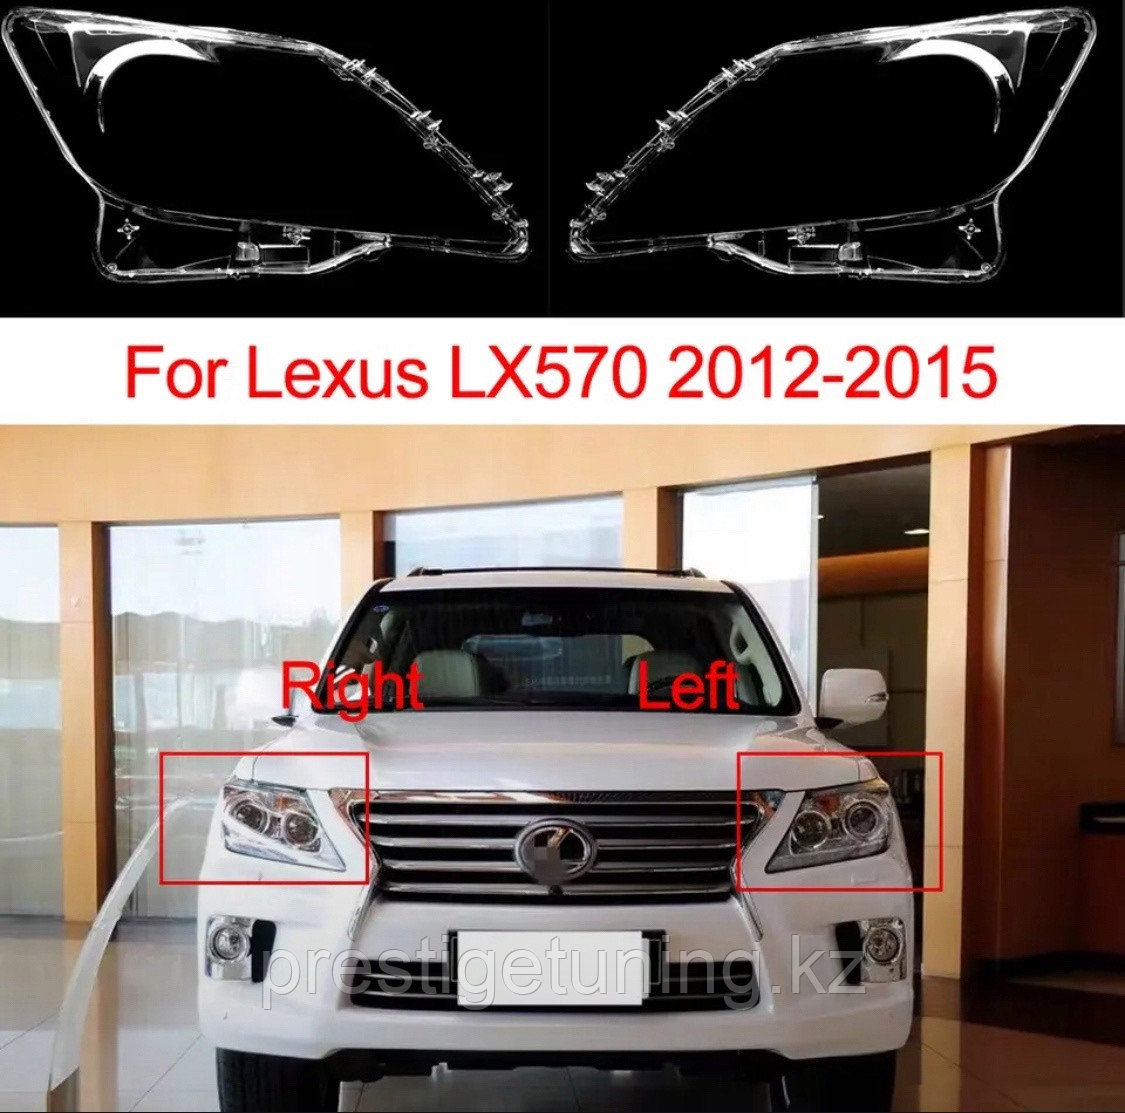 Стекло фары левое (L) на Lexus LX570 2012-15 с надписью KOITO (Дубликат)